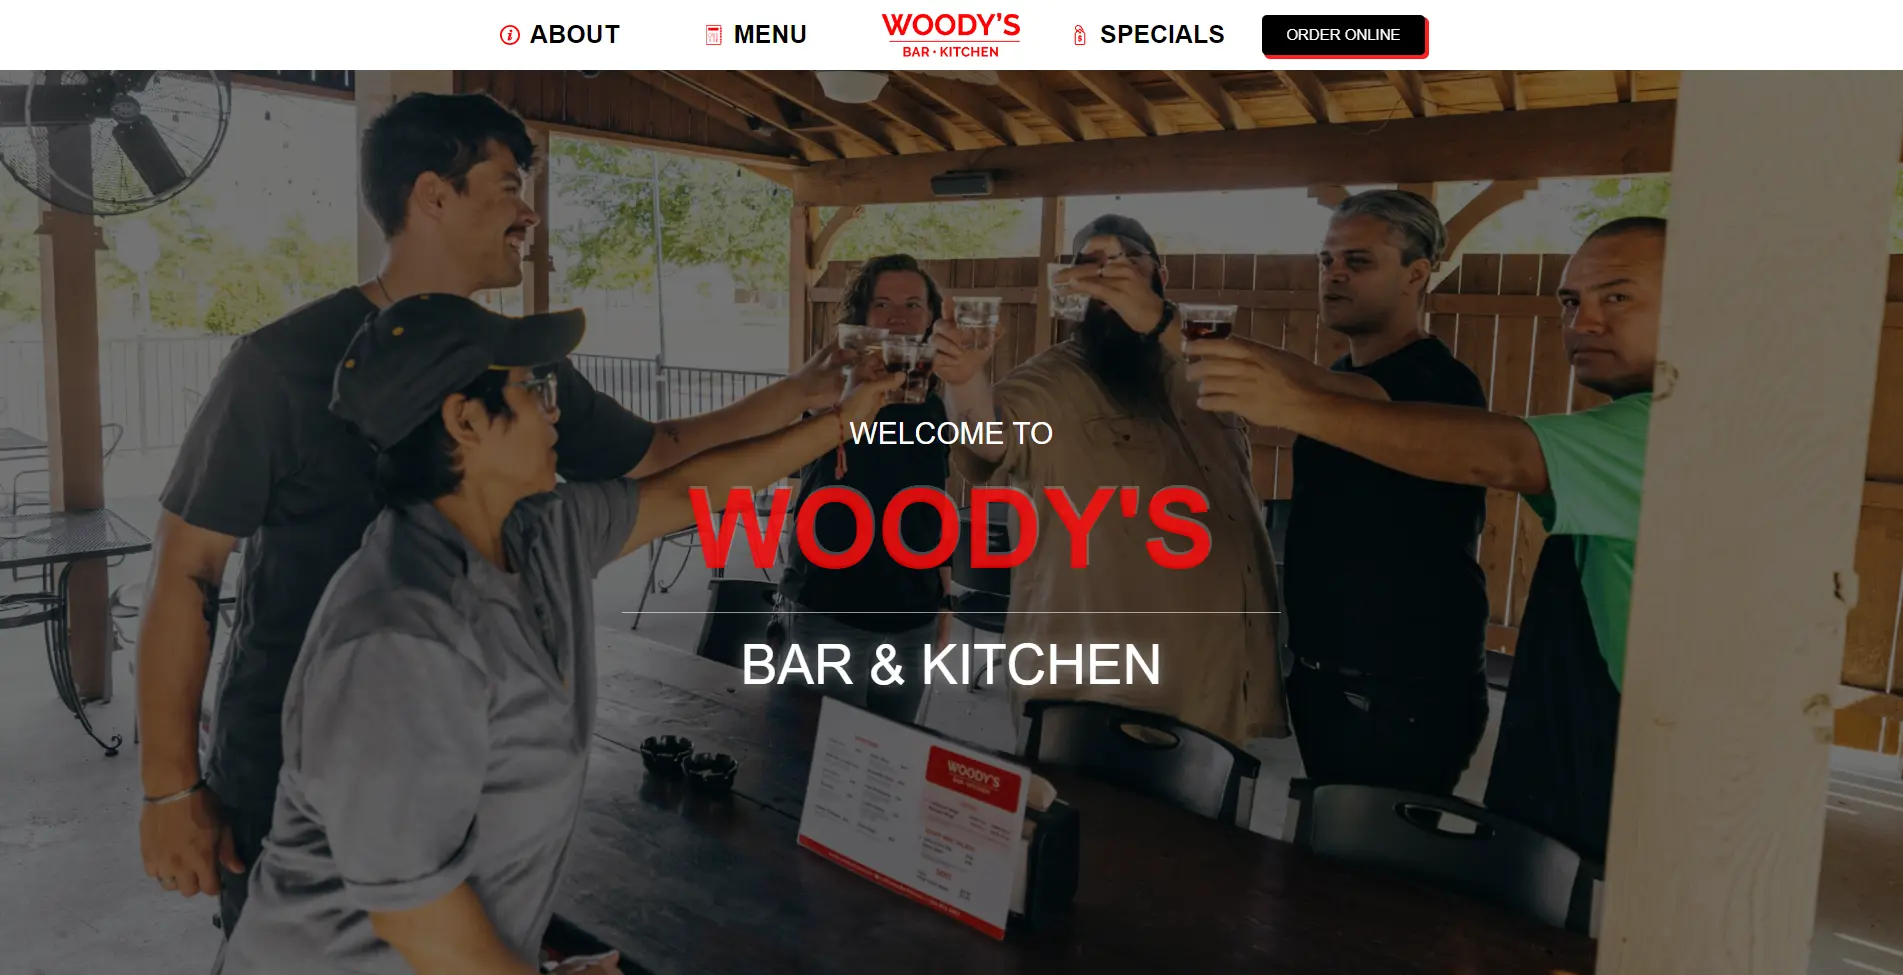 Woody’s Bar & Kitchen